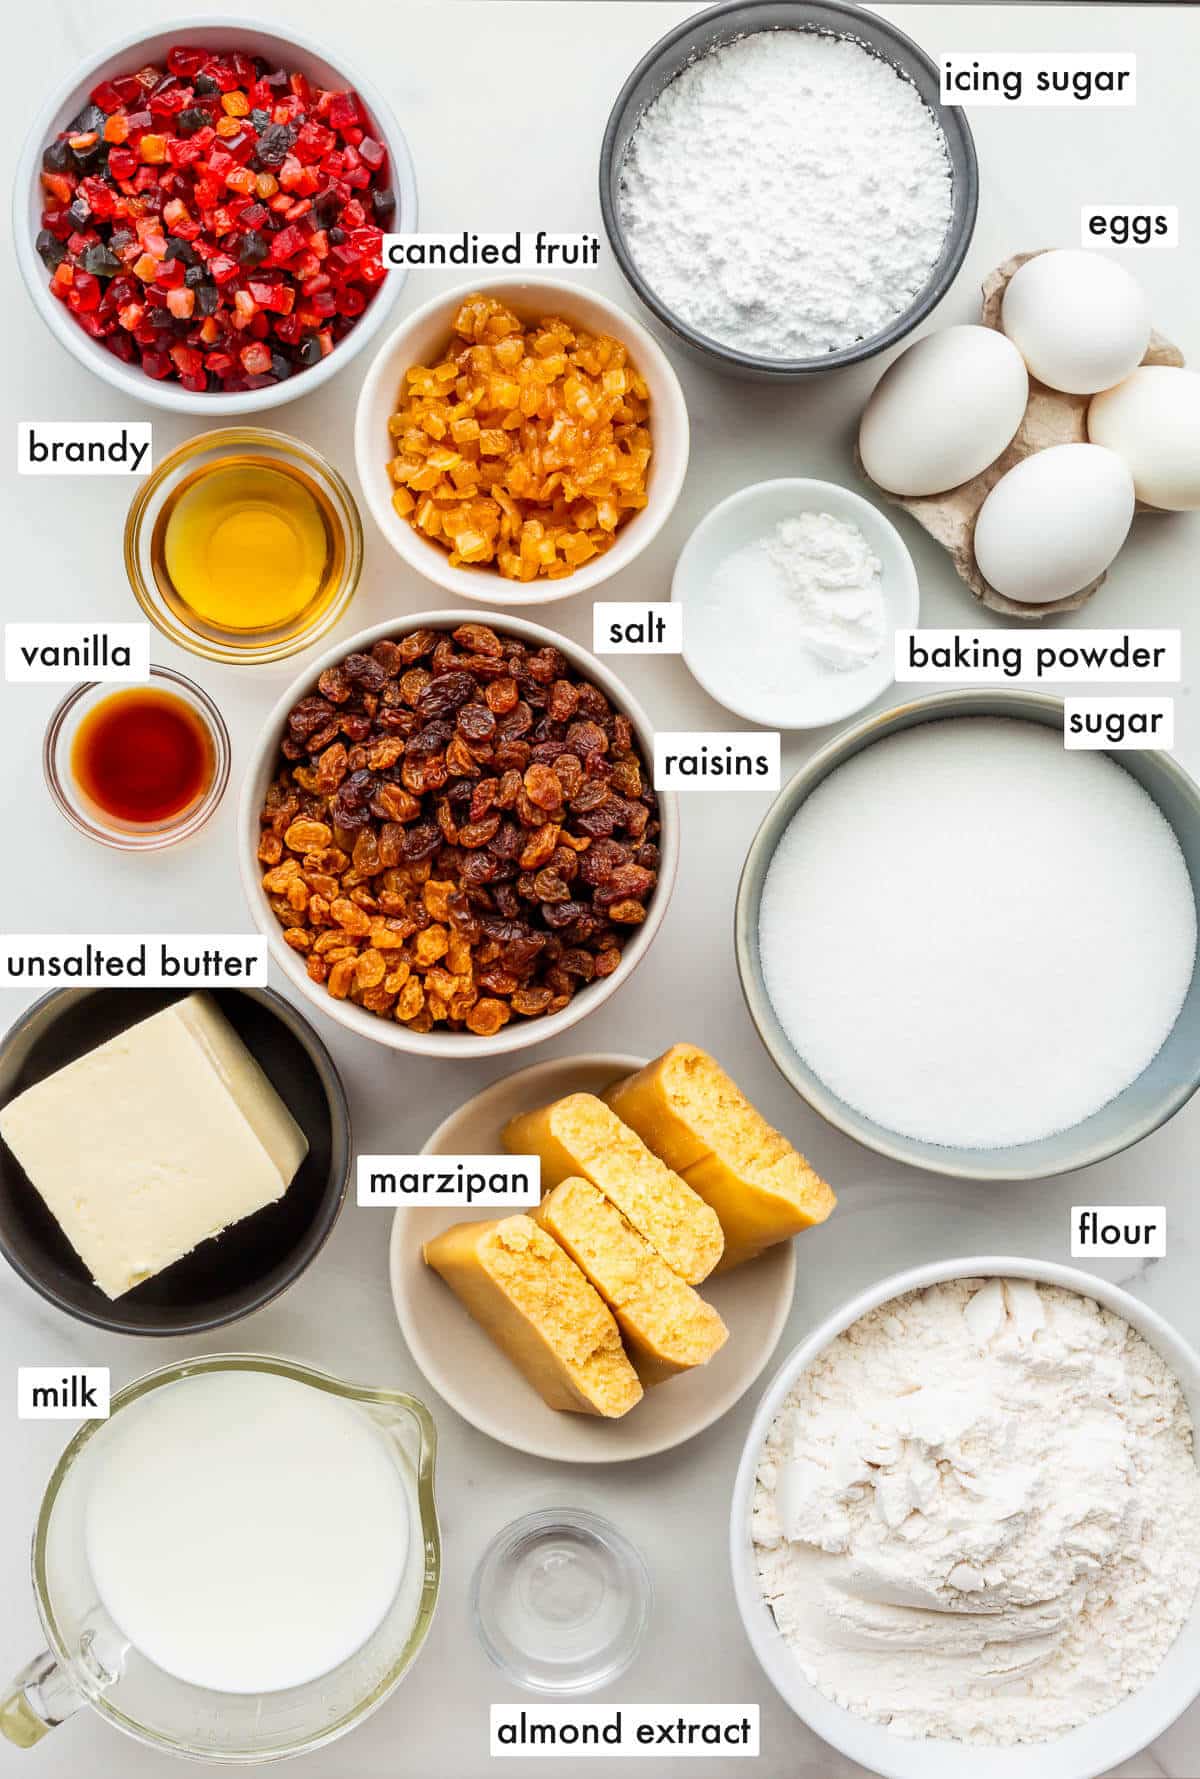 Ingredients to make light fruitcake measured out.